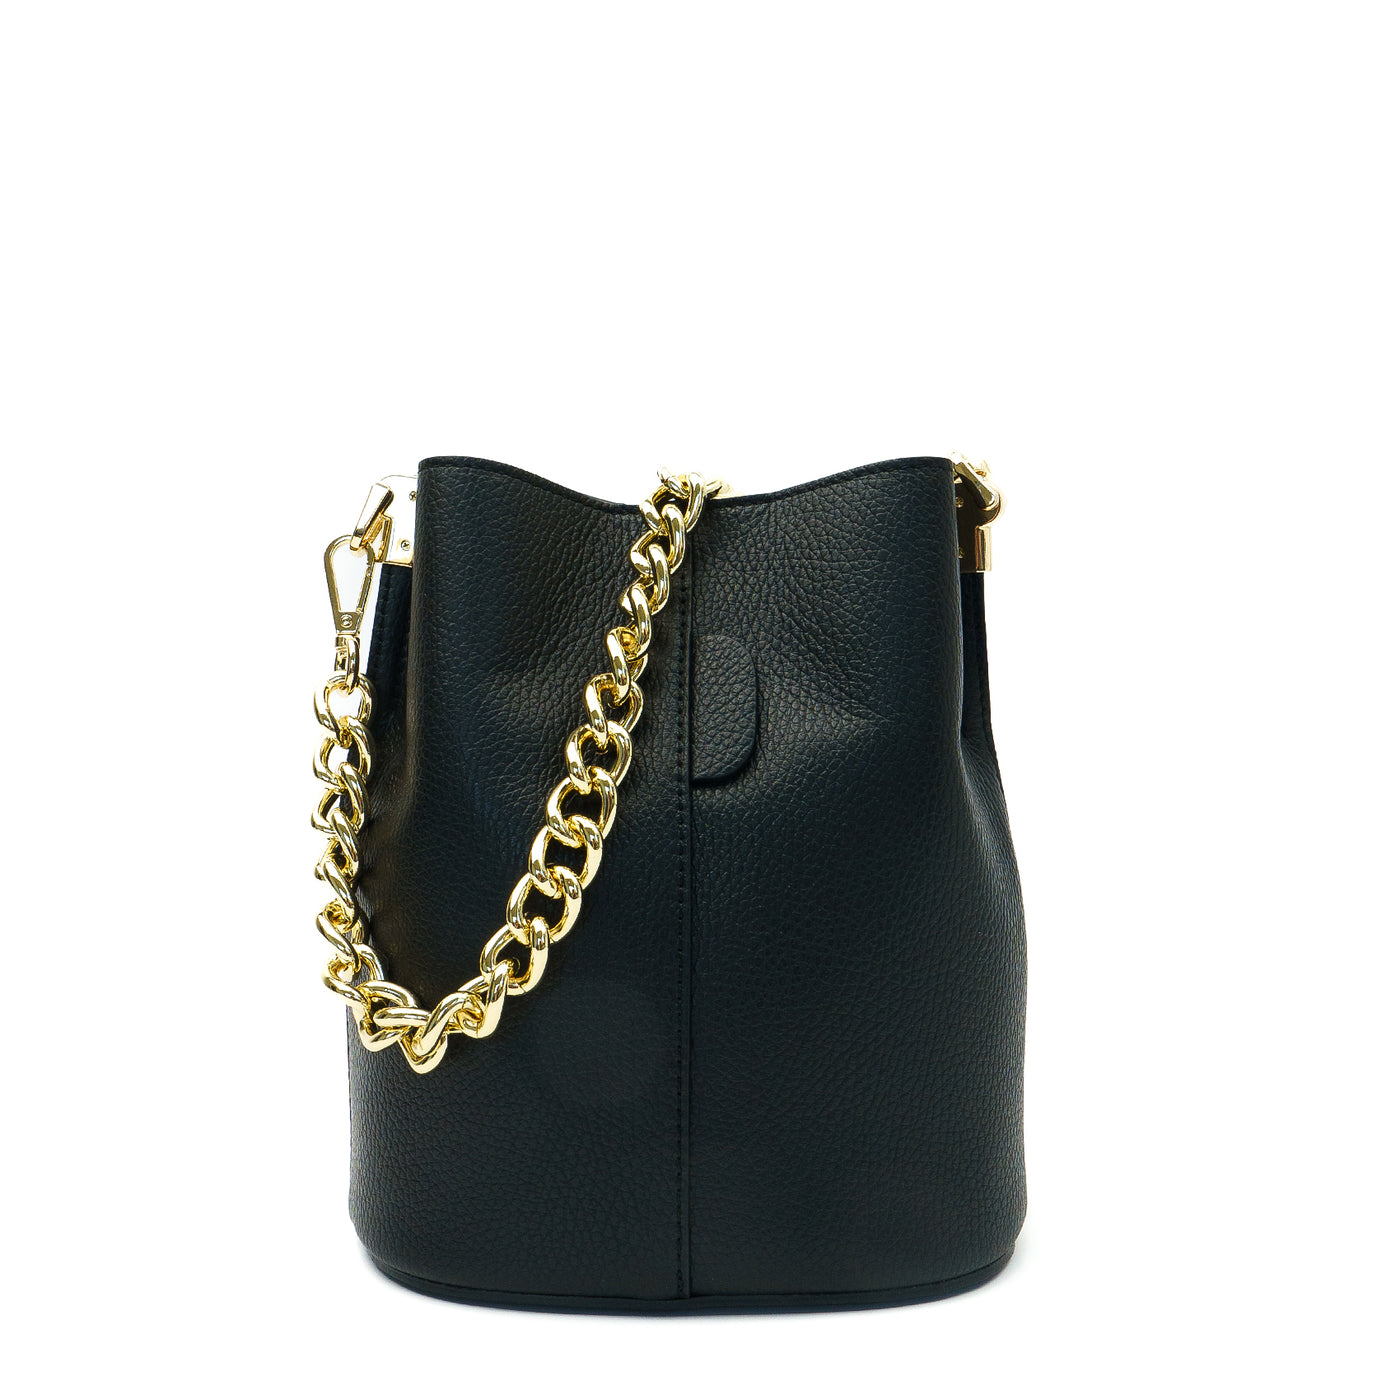 Leather bag "Ravenna midi" with leather chain, Black